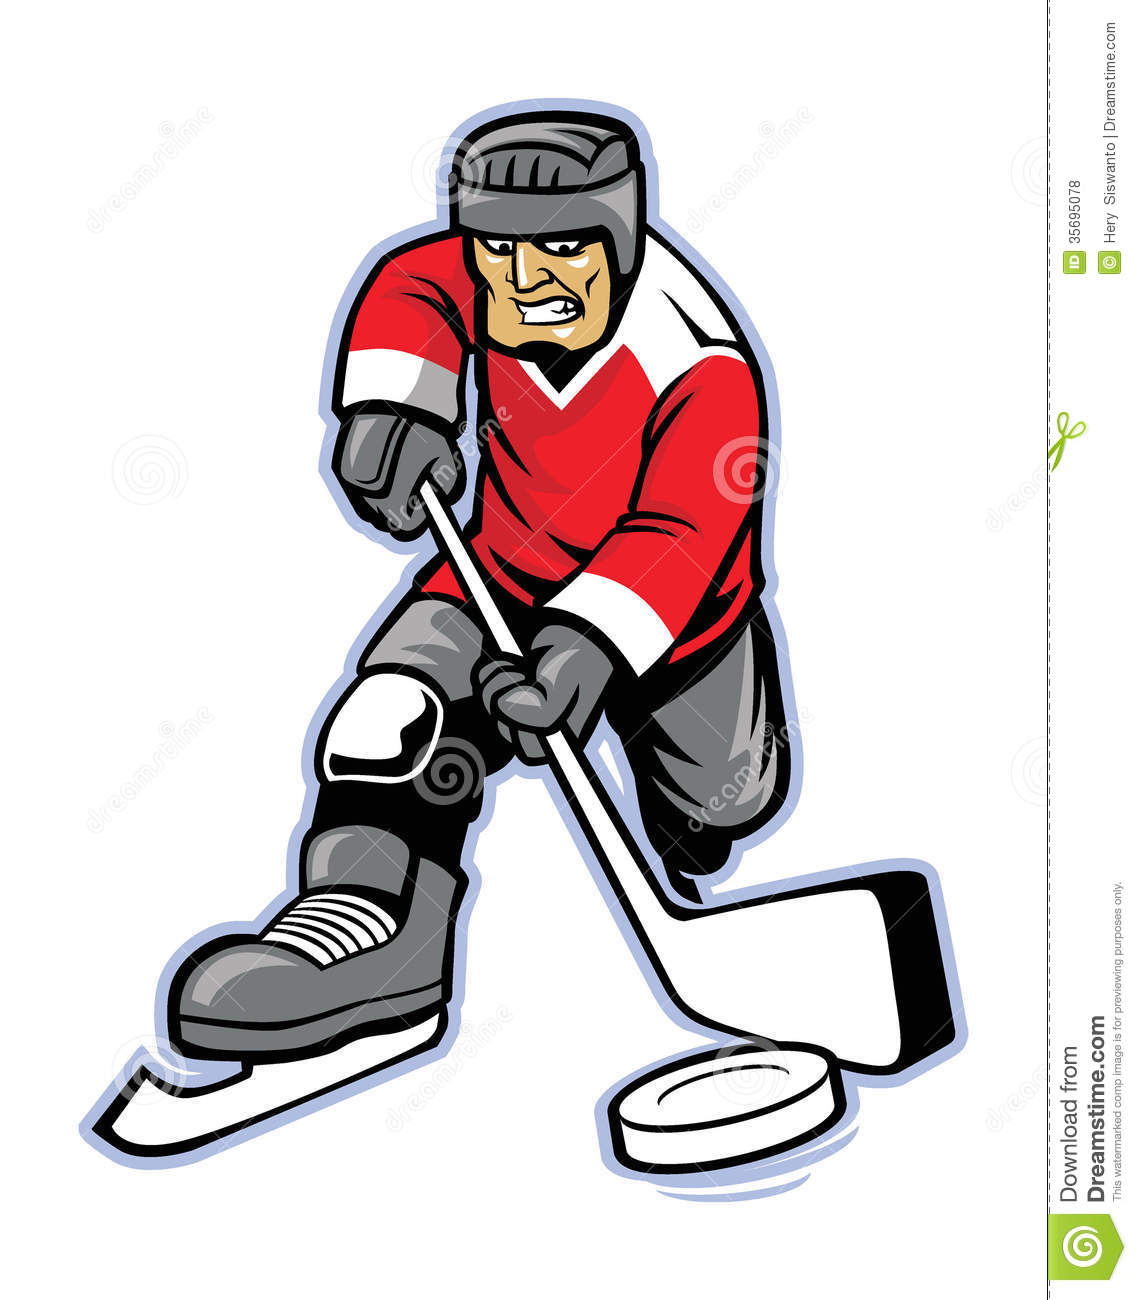 Pin Ice Hockey Player 8 Clipart Clip Art On Pinterest